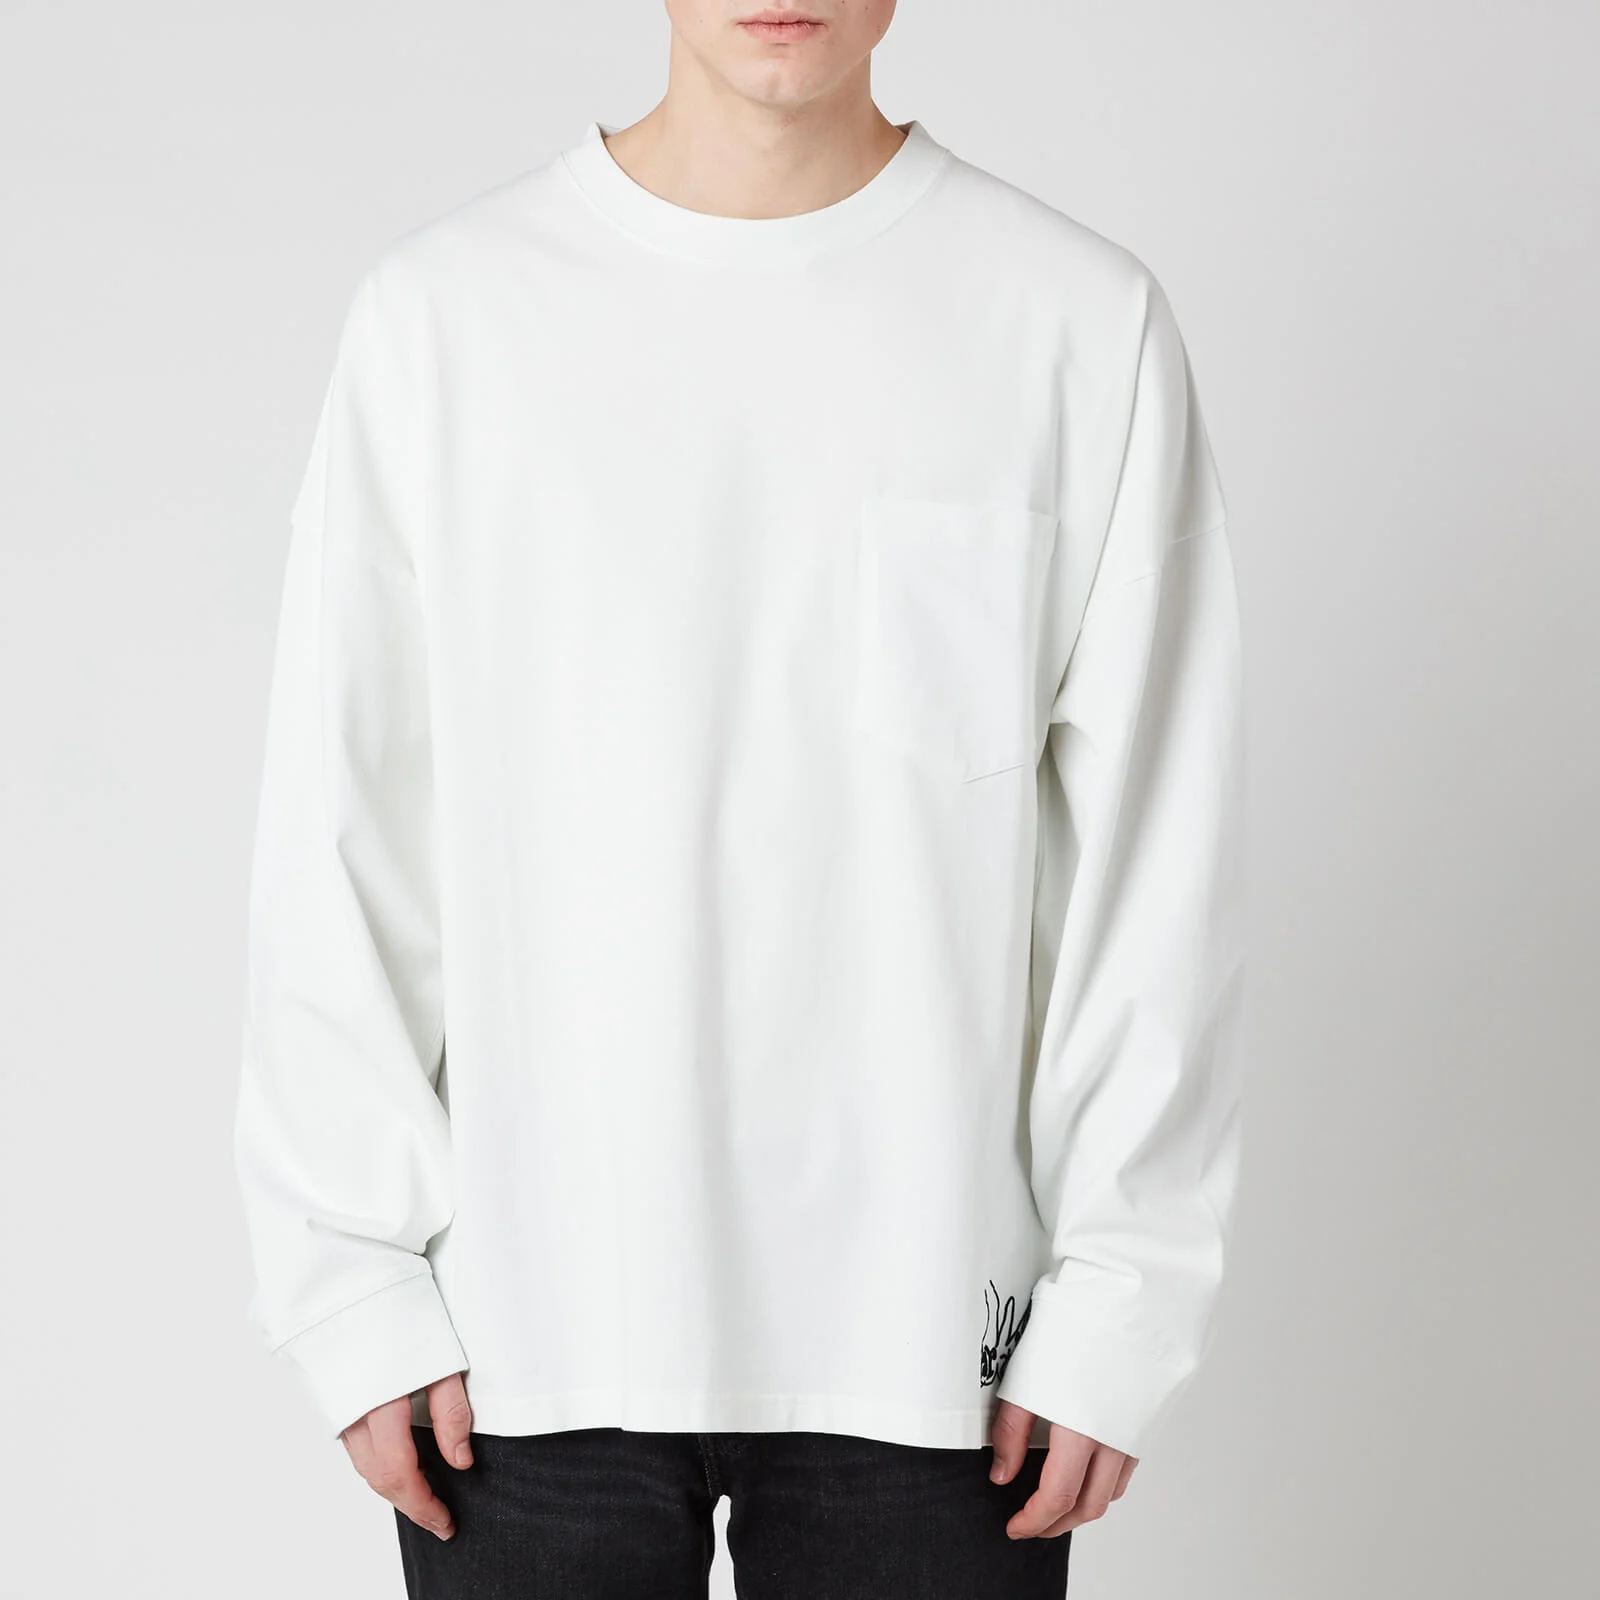 Martine Rose Men's Warung Oversized Long Sleeve T-Shirt - White Image 1